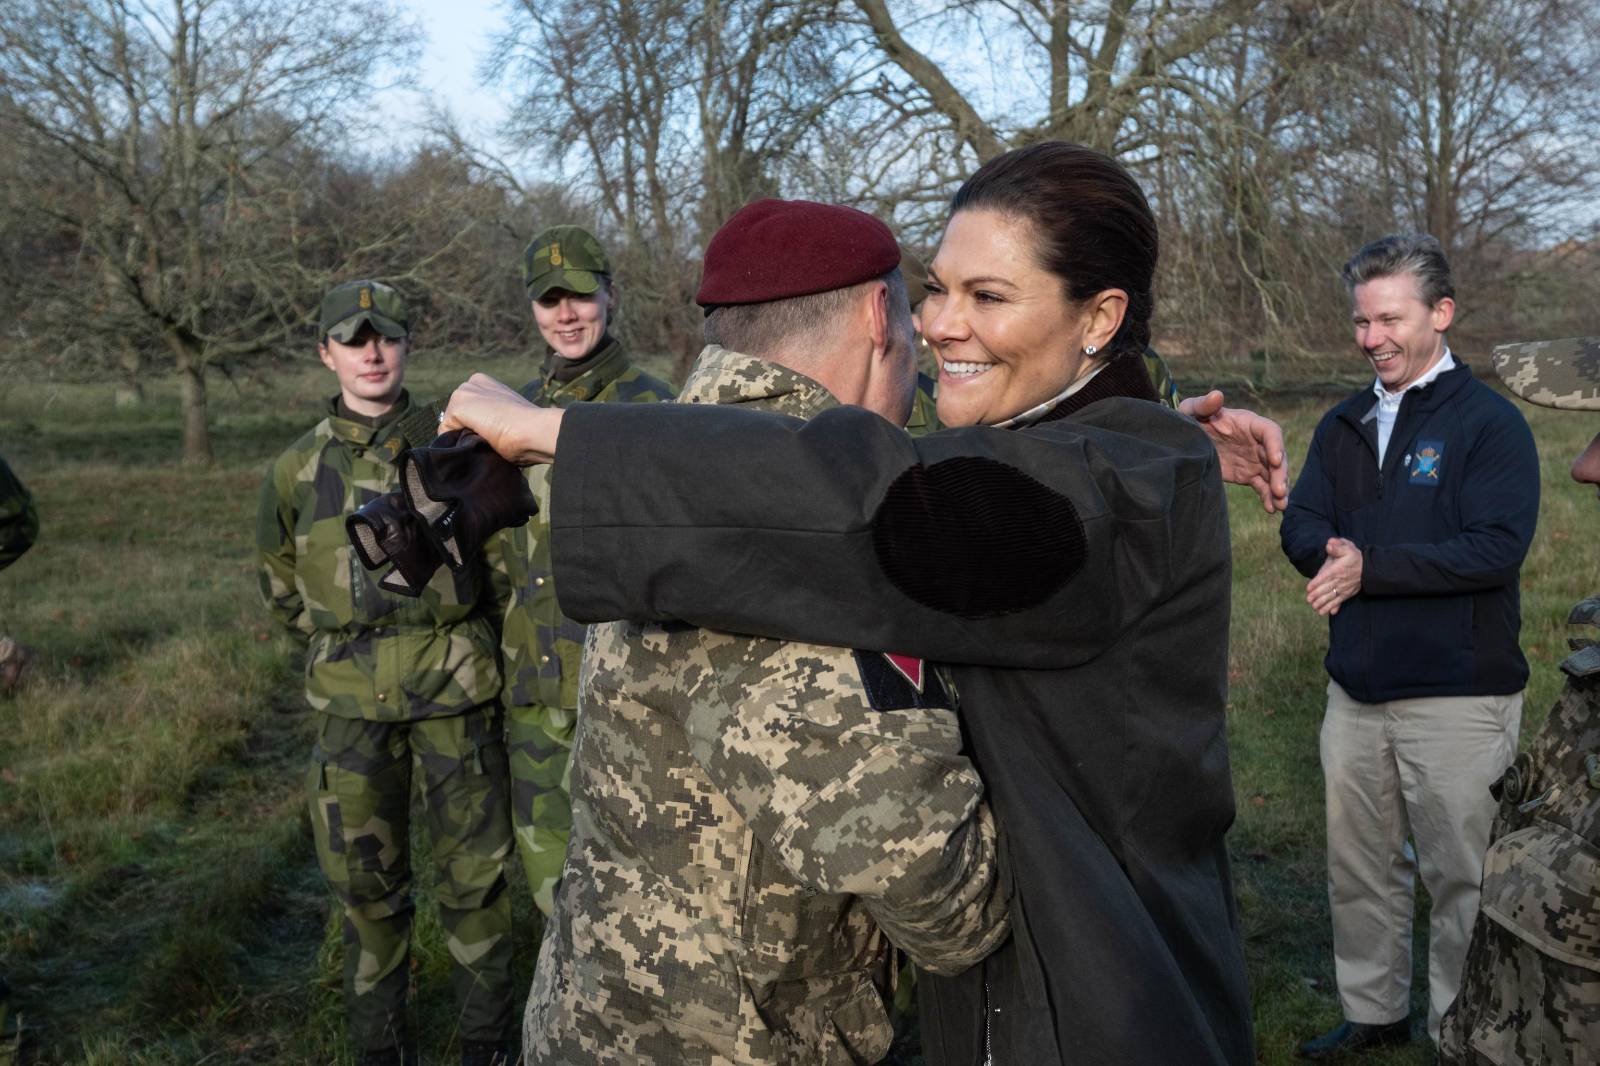 Victoria, Crown Princess of Sweden, Duchess of Västergötland and Prince Daniel, Duke of Västergötland, visited Ukrainian servicemen